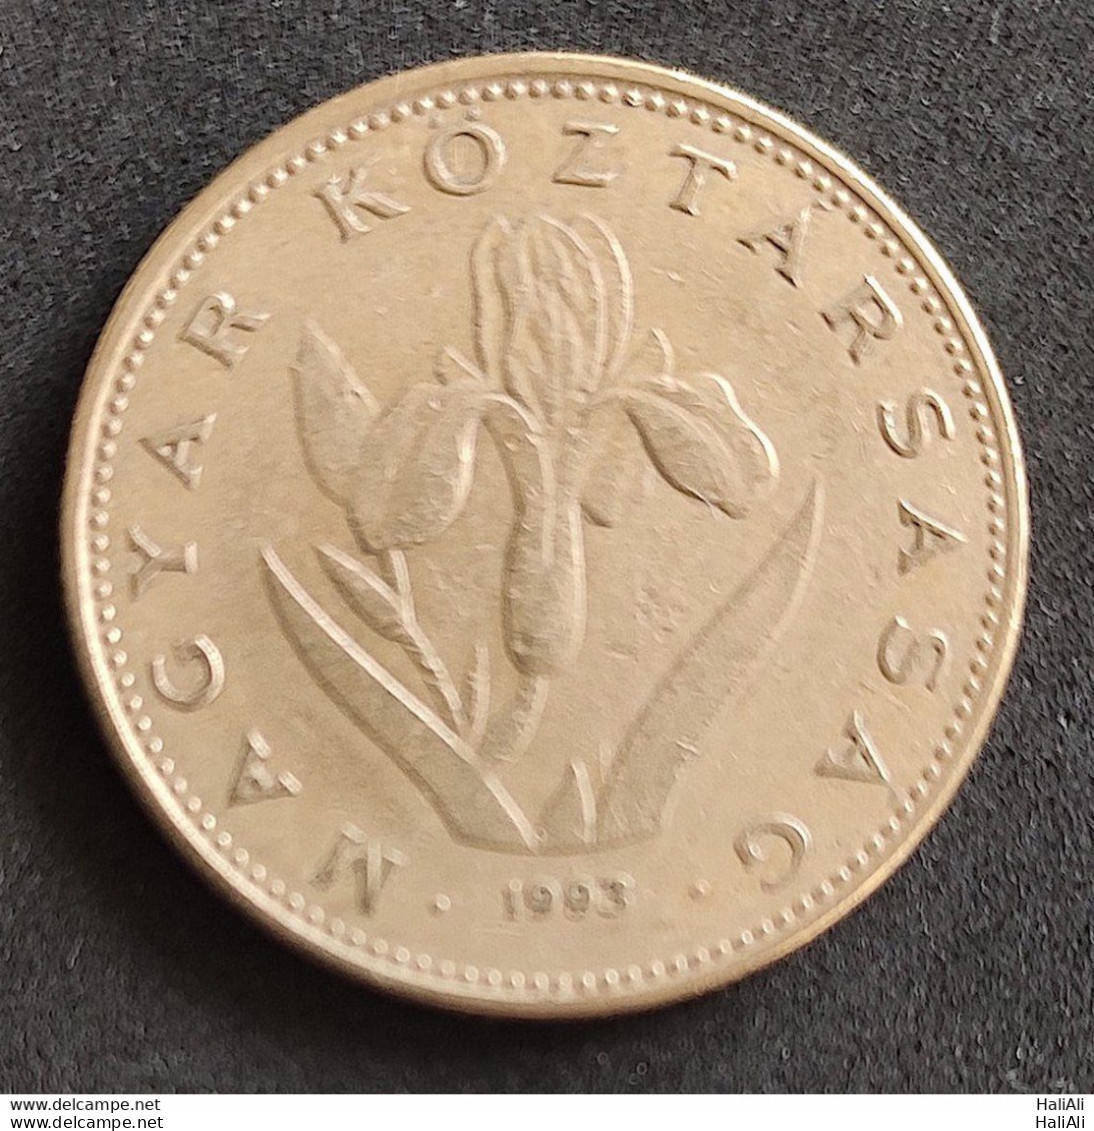 Coin Hungary 1993 20 Forint 1 - Hungary